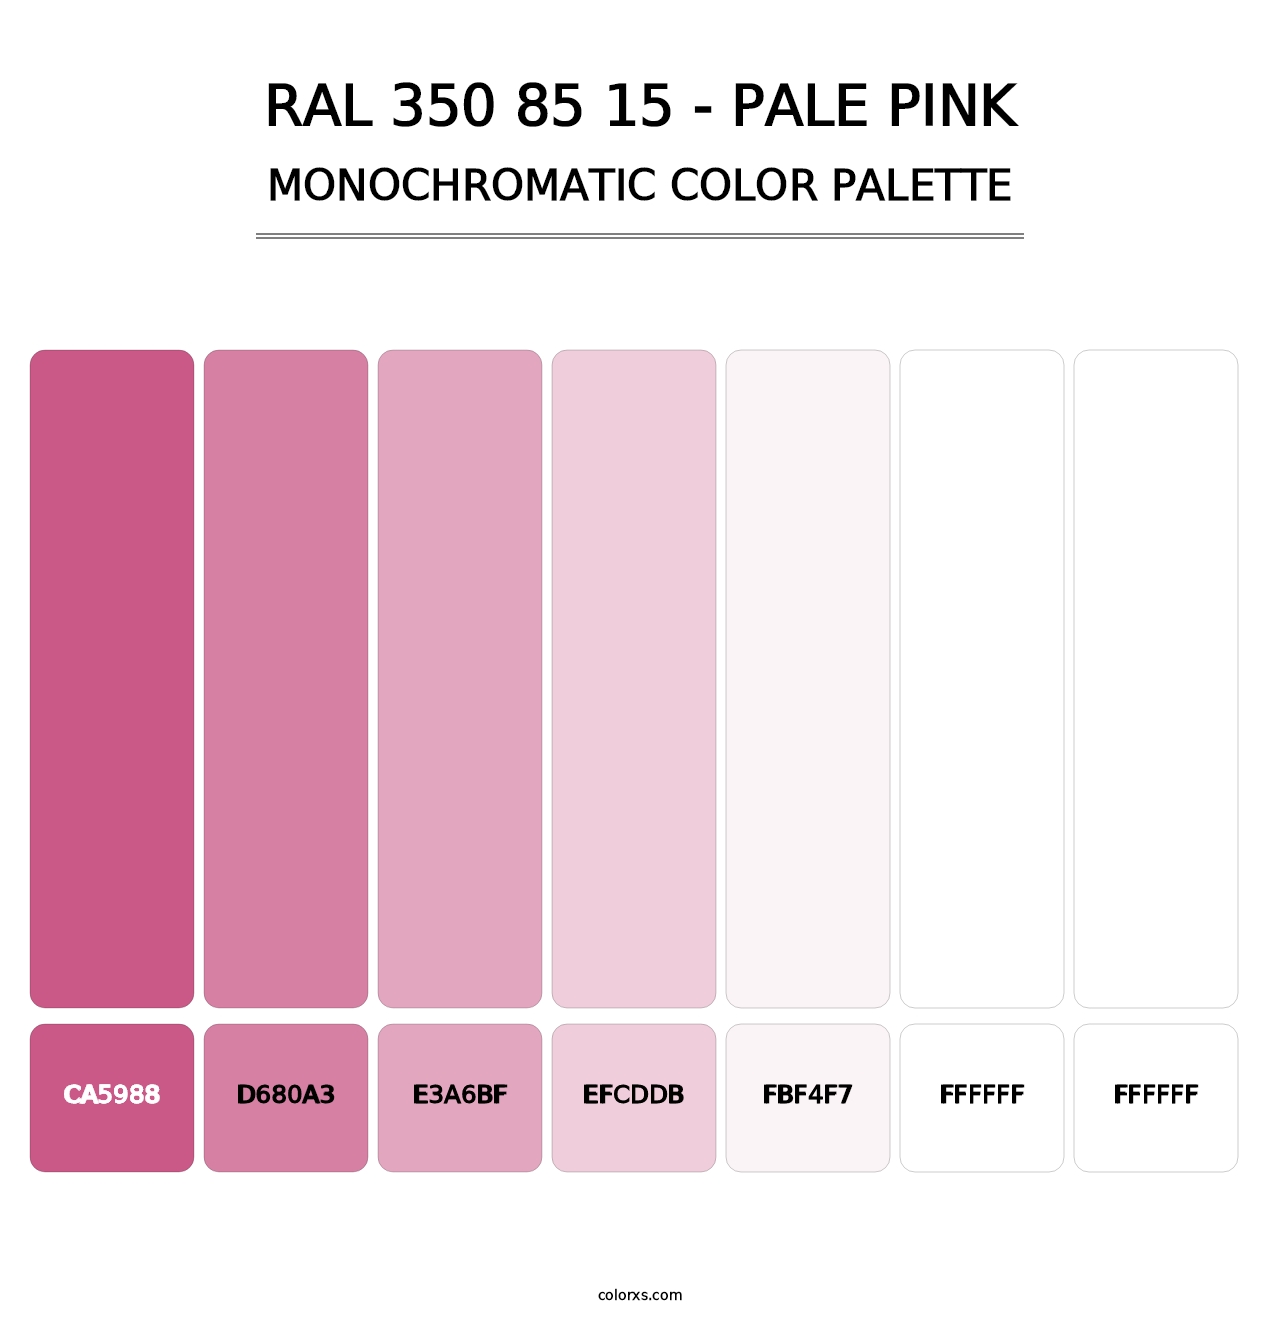 RAL 350 85 15 - Pale Pink - Monochromatic Color Palette